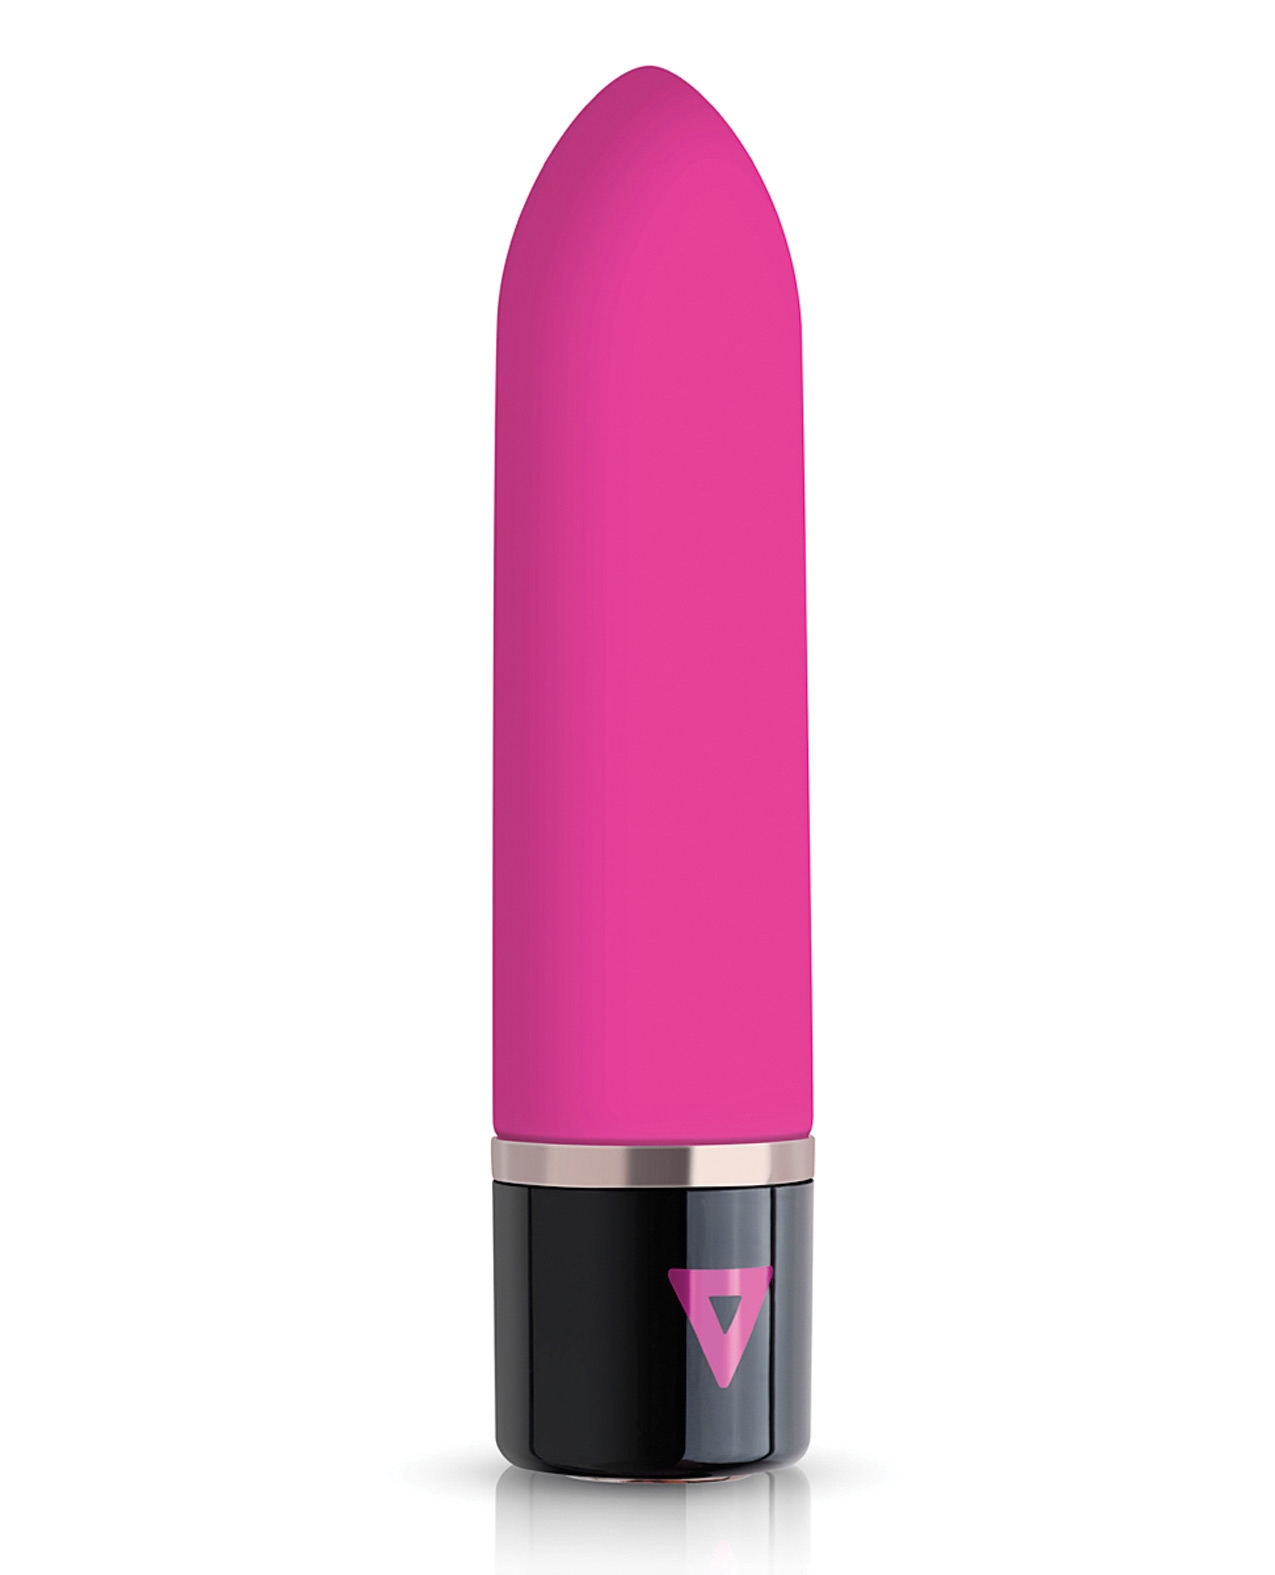 https://www.shopcupids.com/70565/lil-vibe-bullet-rechargeable-vibrator-pink.jpg